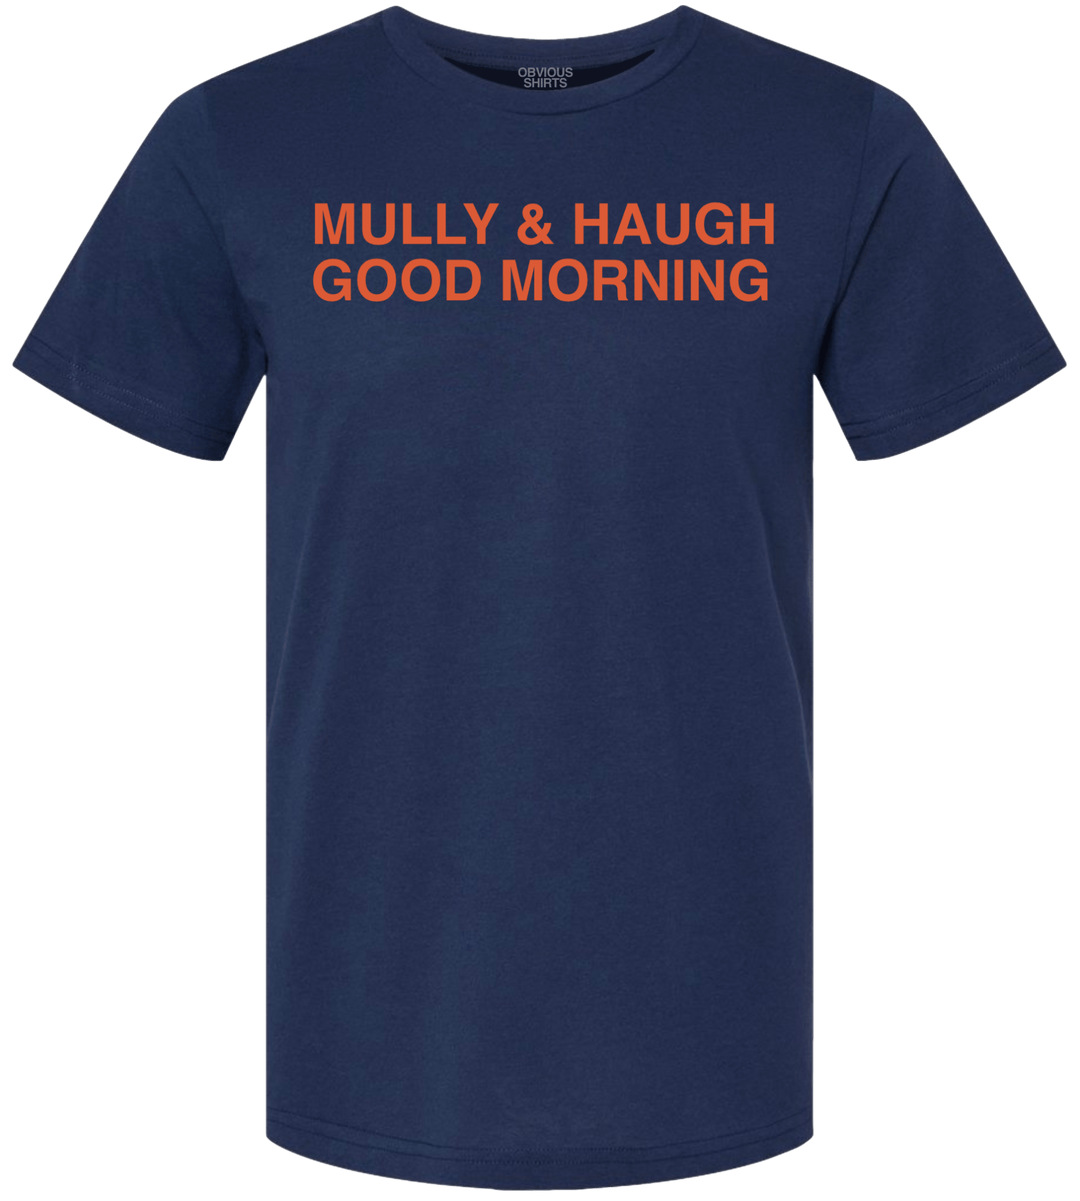 MULLY & HAUGH GOOD MORNING. (NAVY/ORANGE) - OBVIOUS SHIRTS